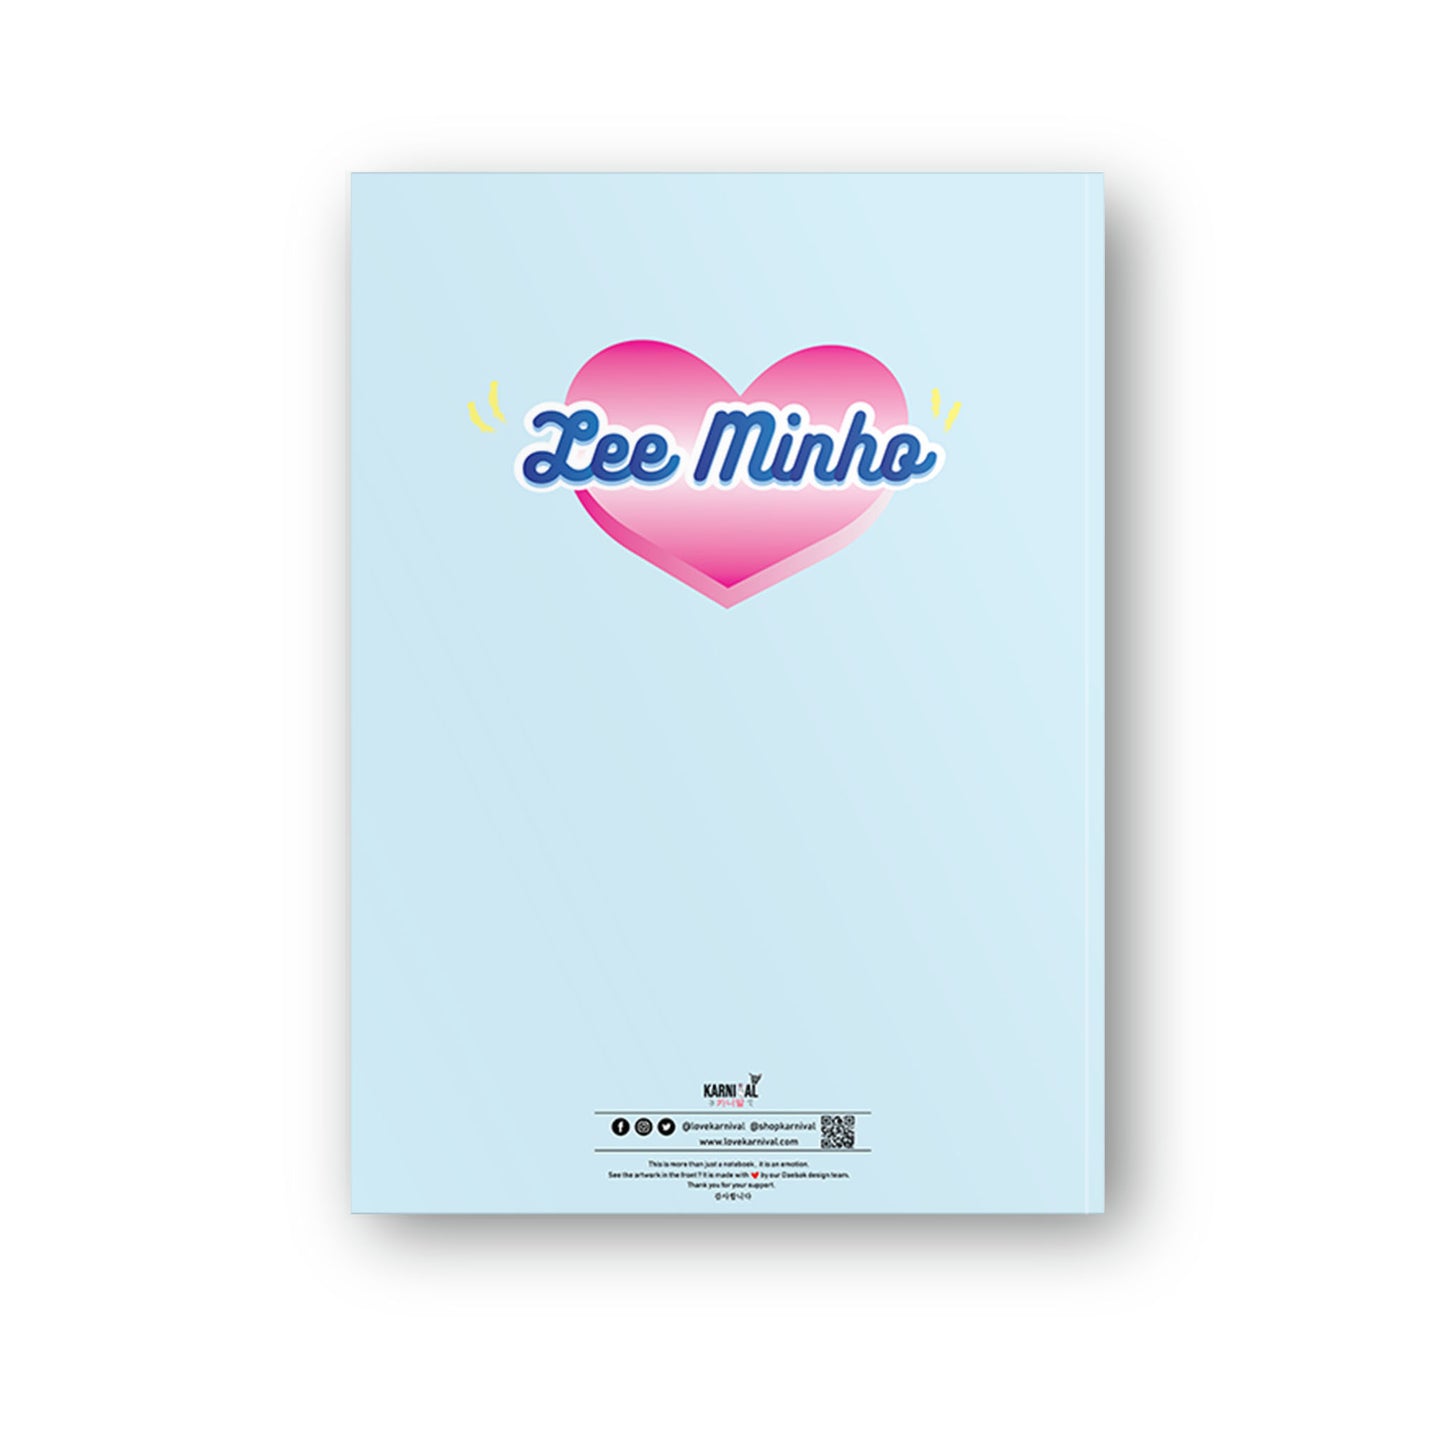 Lee Min Ho Oppaholic Notebook